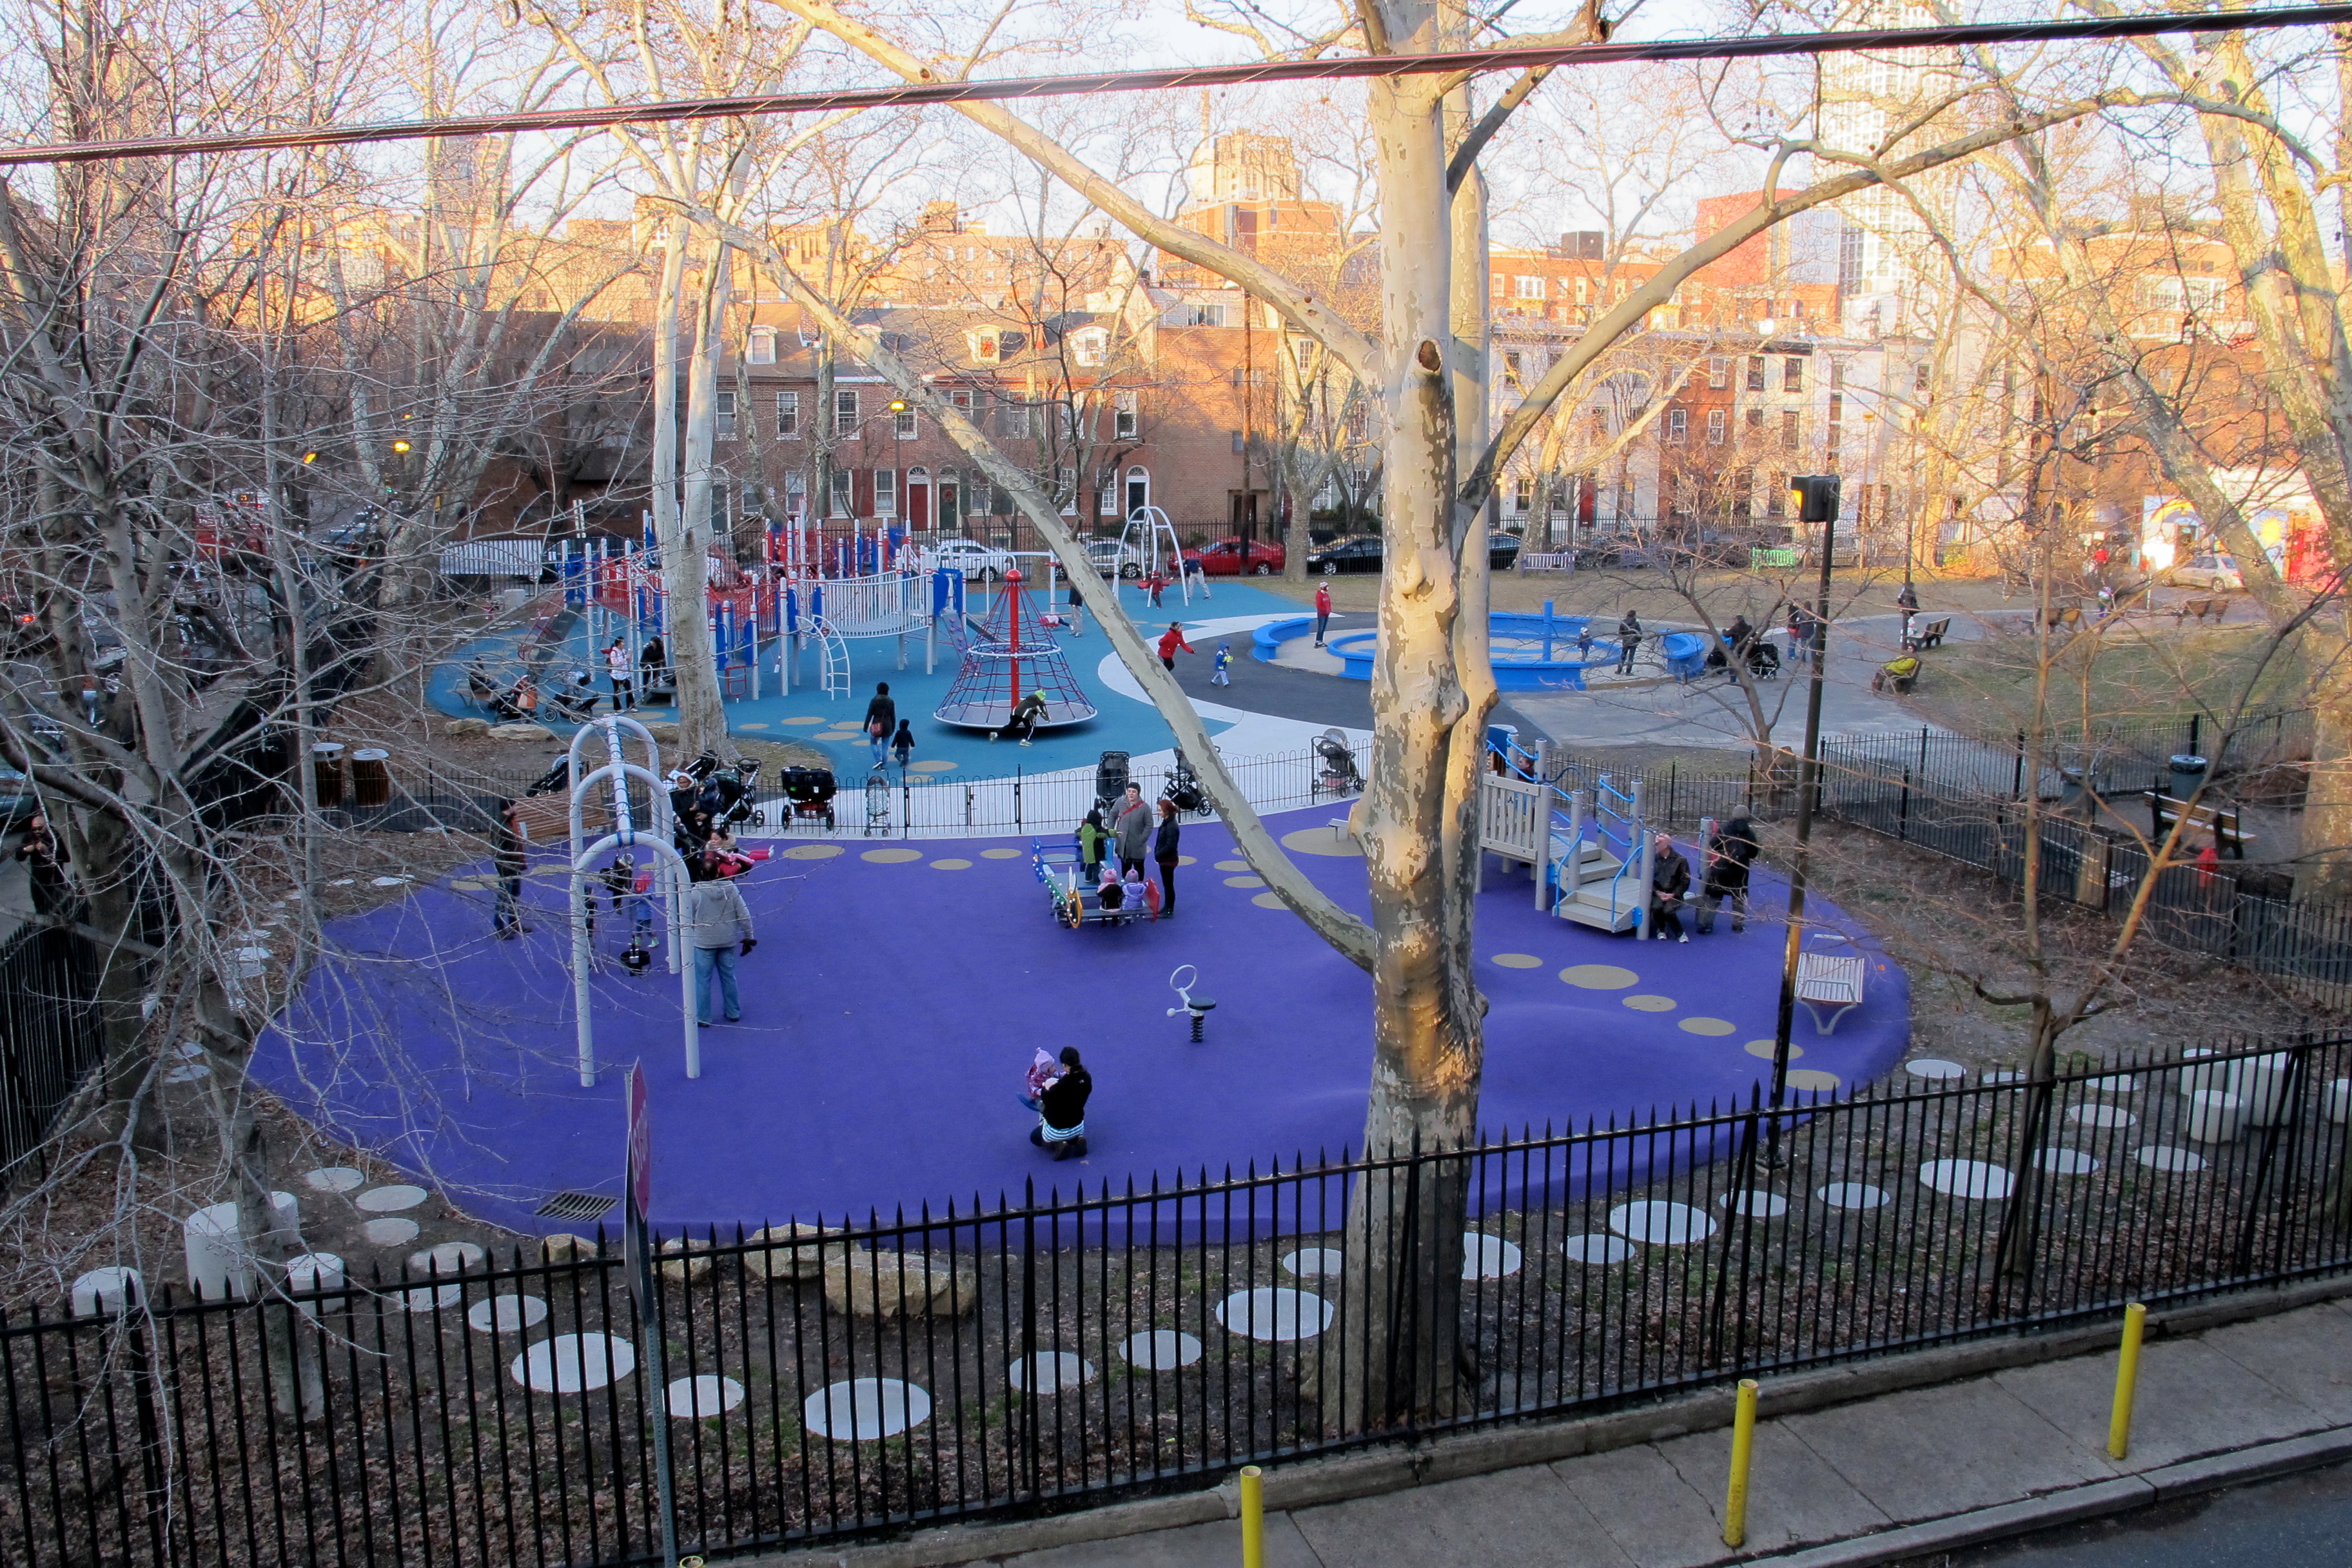 Seger Park Playground